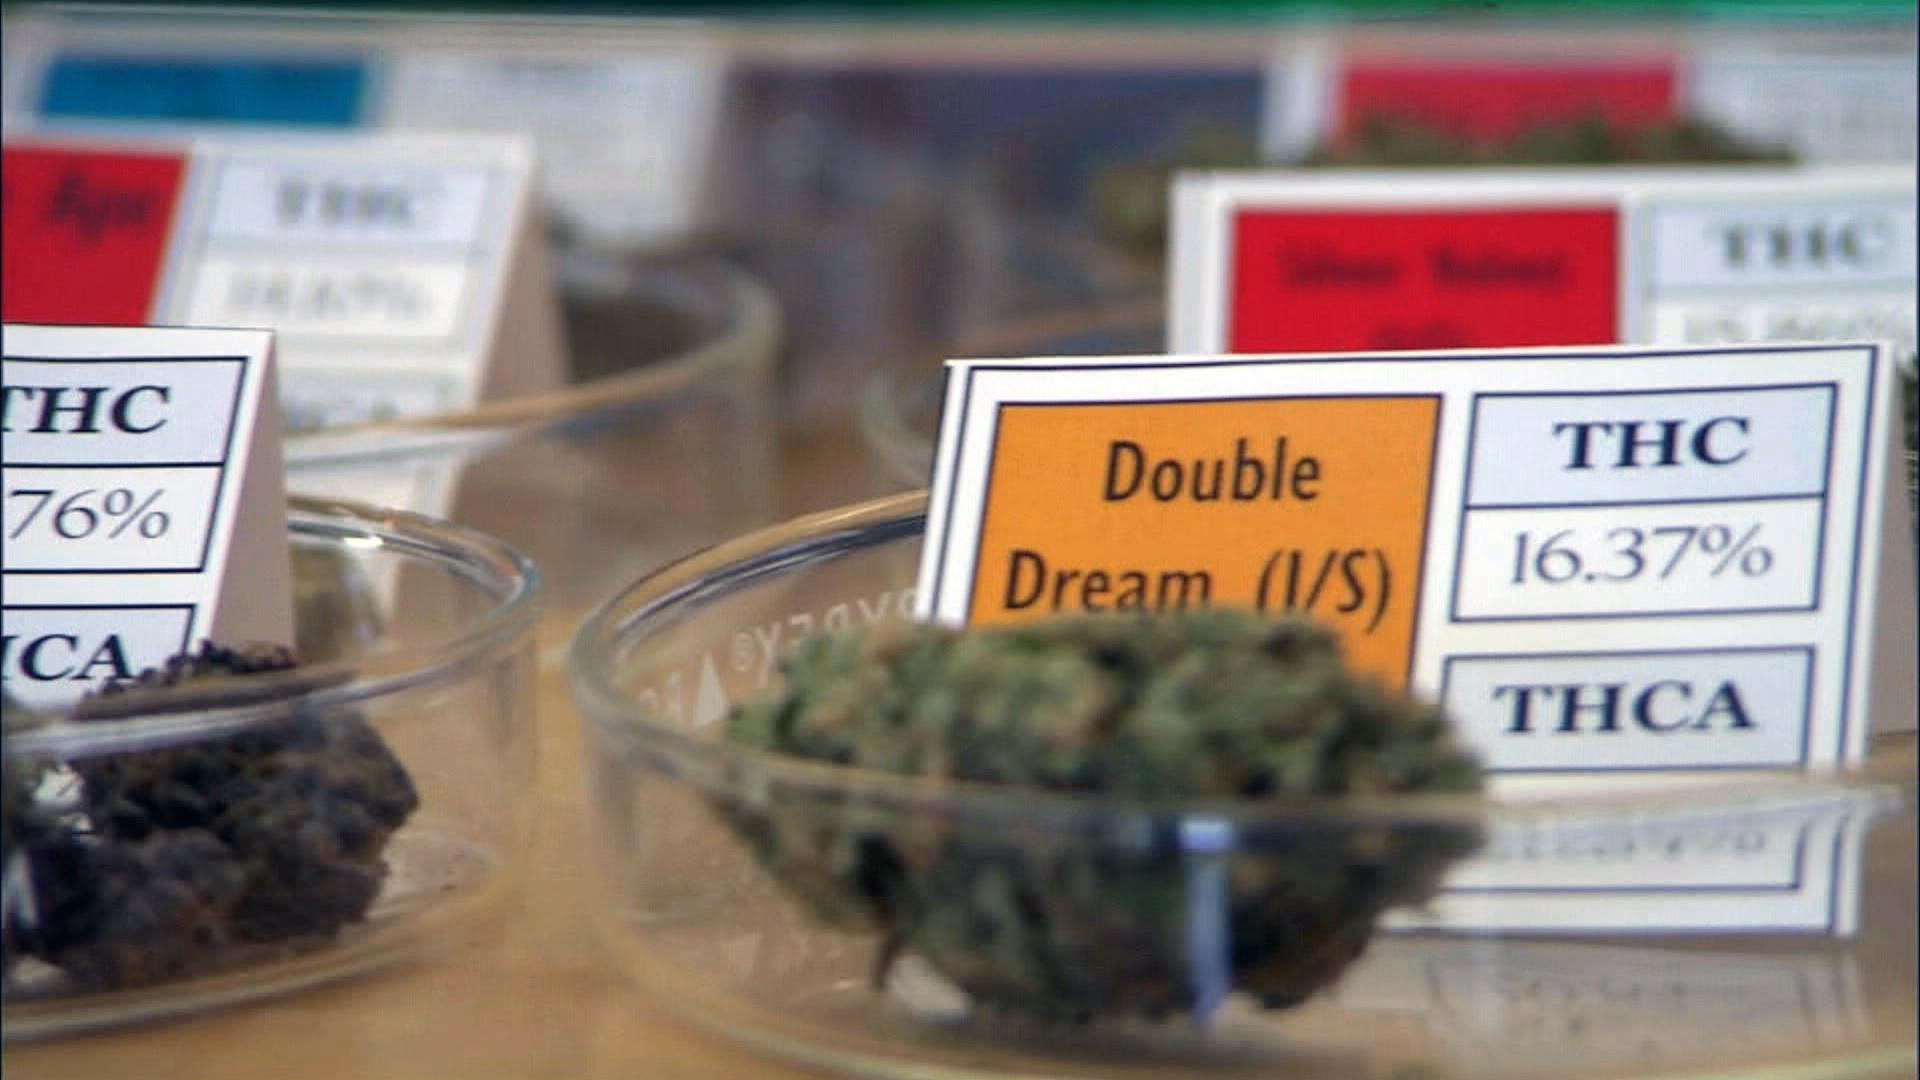 Florida city fires employee over legal medical marijuana use - ABC News